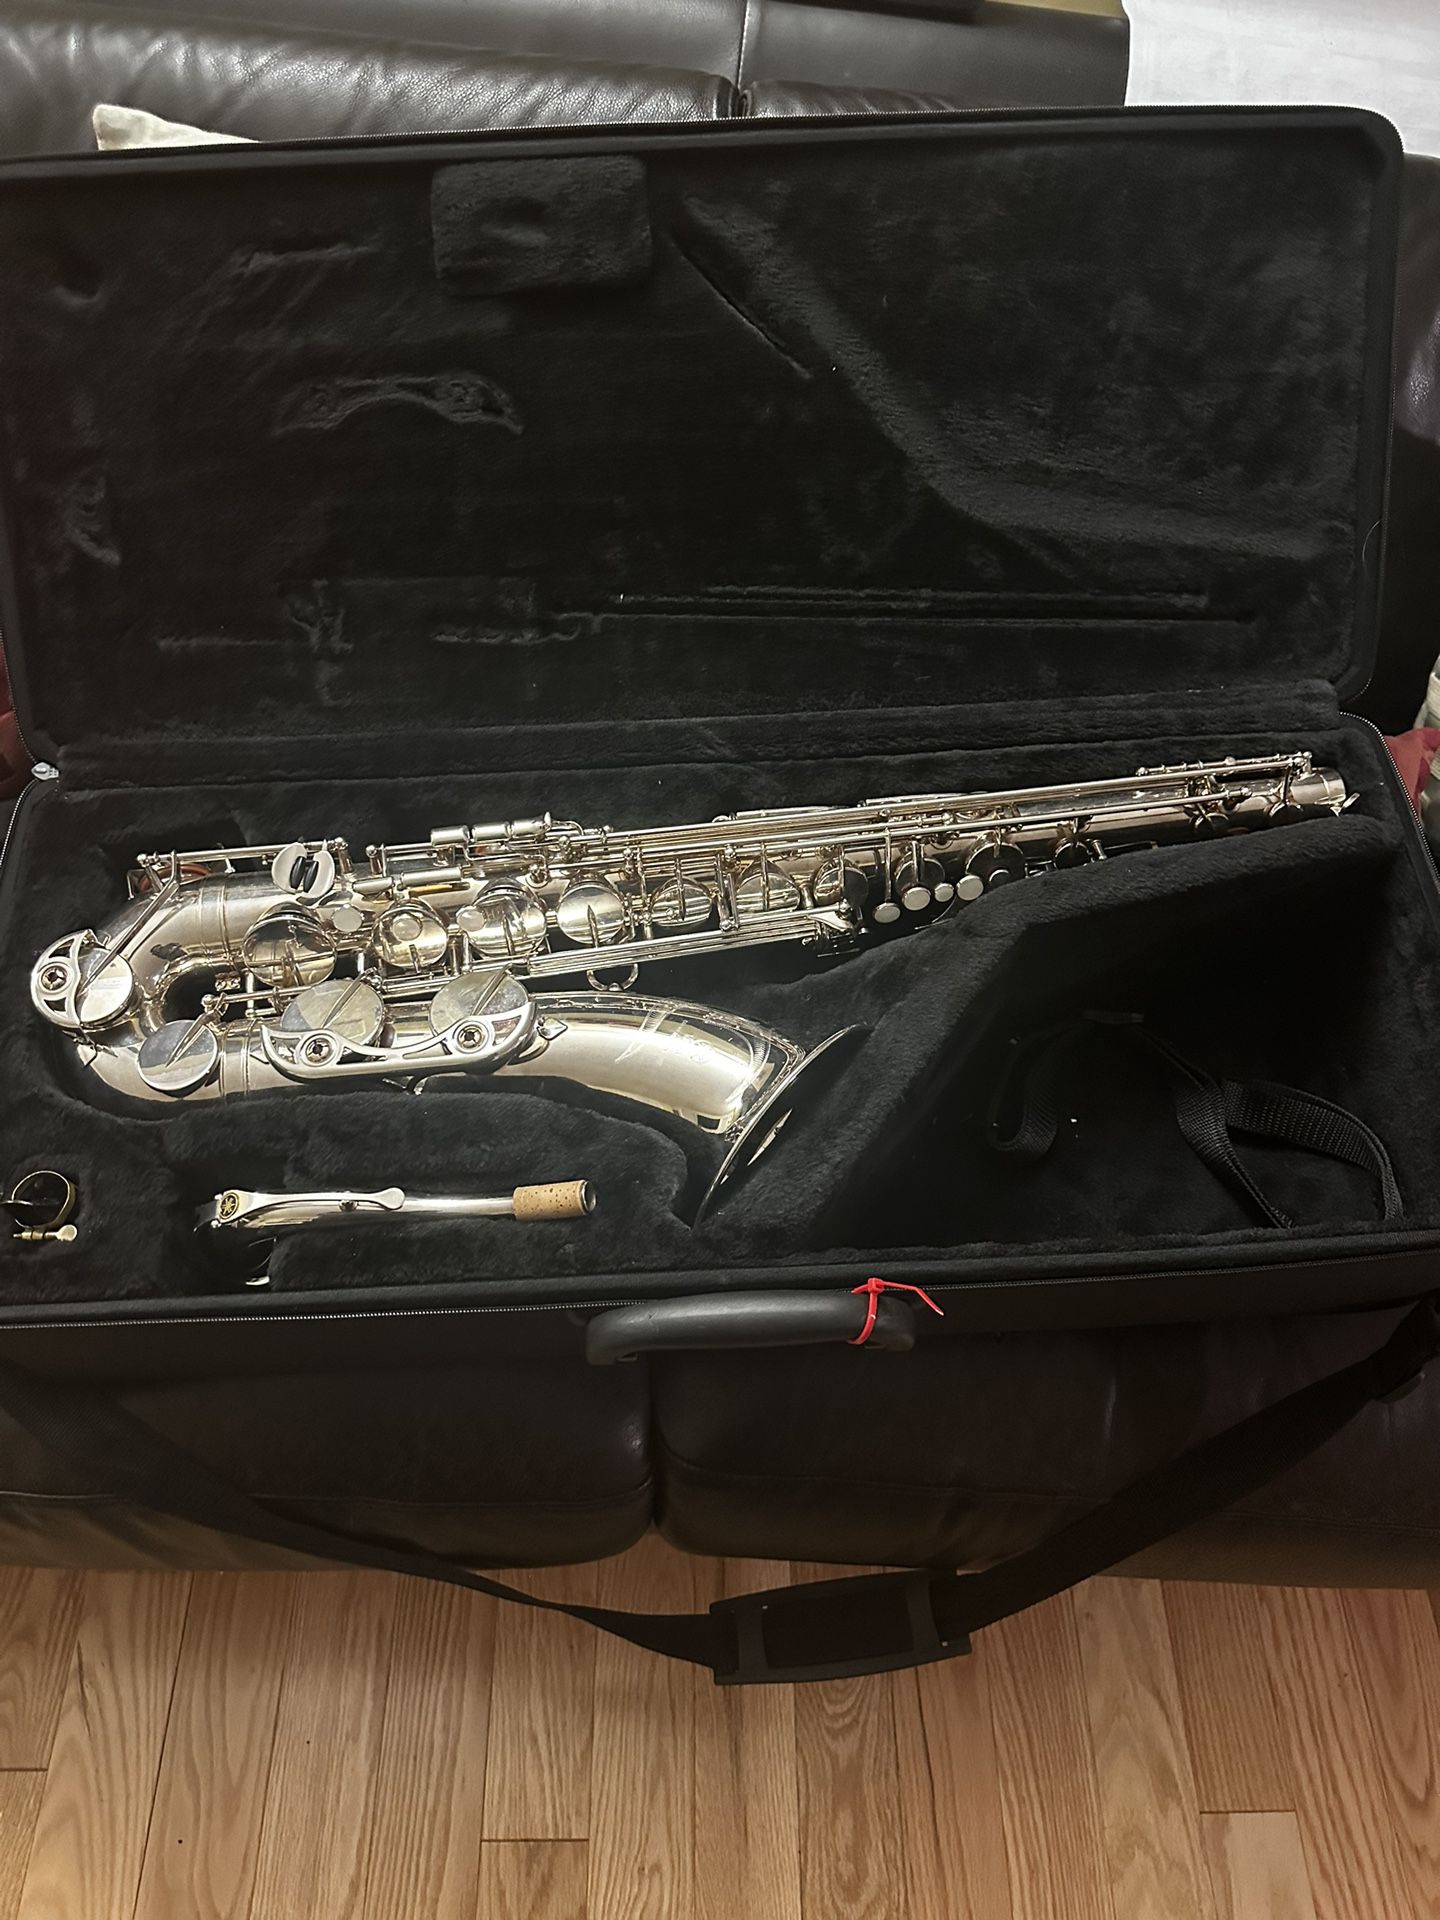 yamaha yts 480 intermediate silver plated saxophone